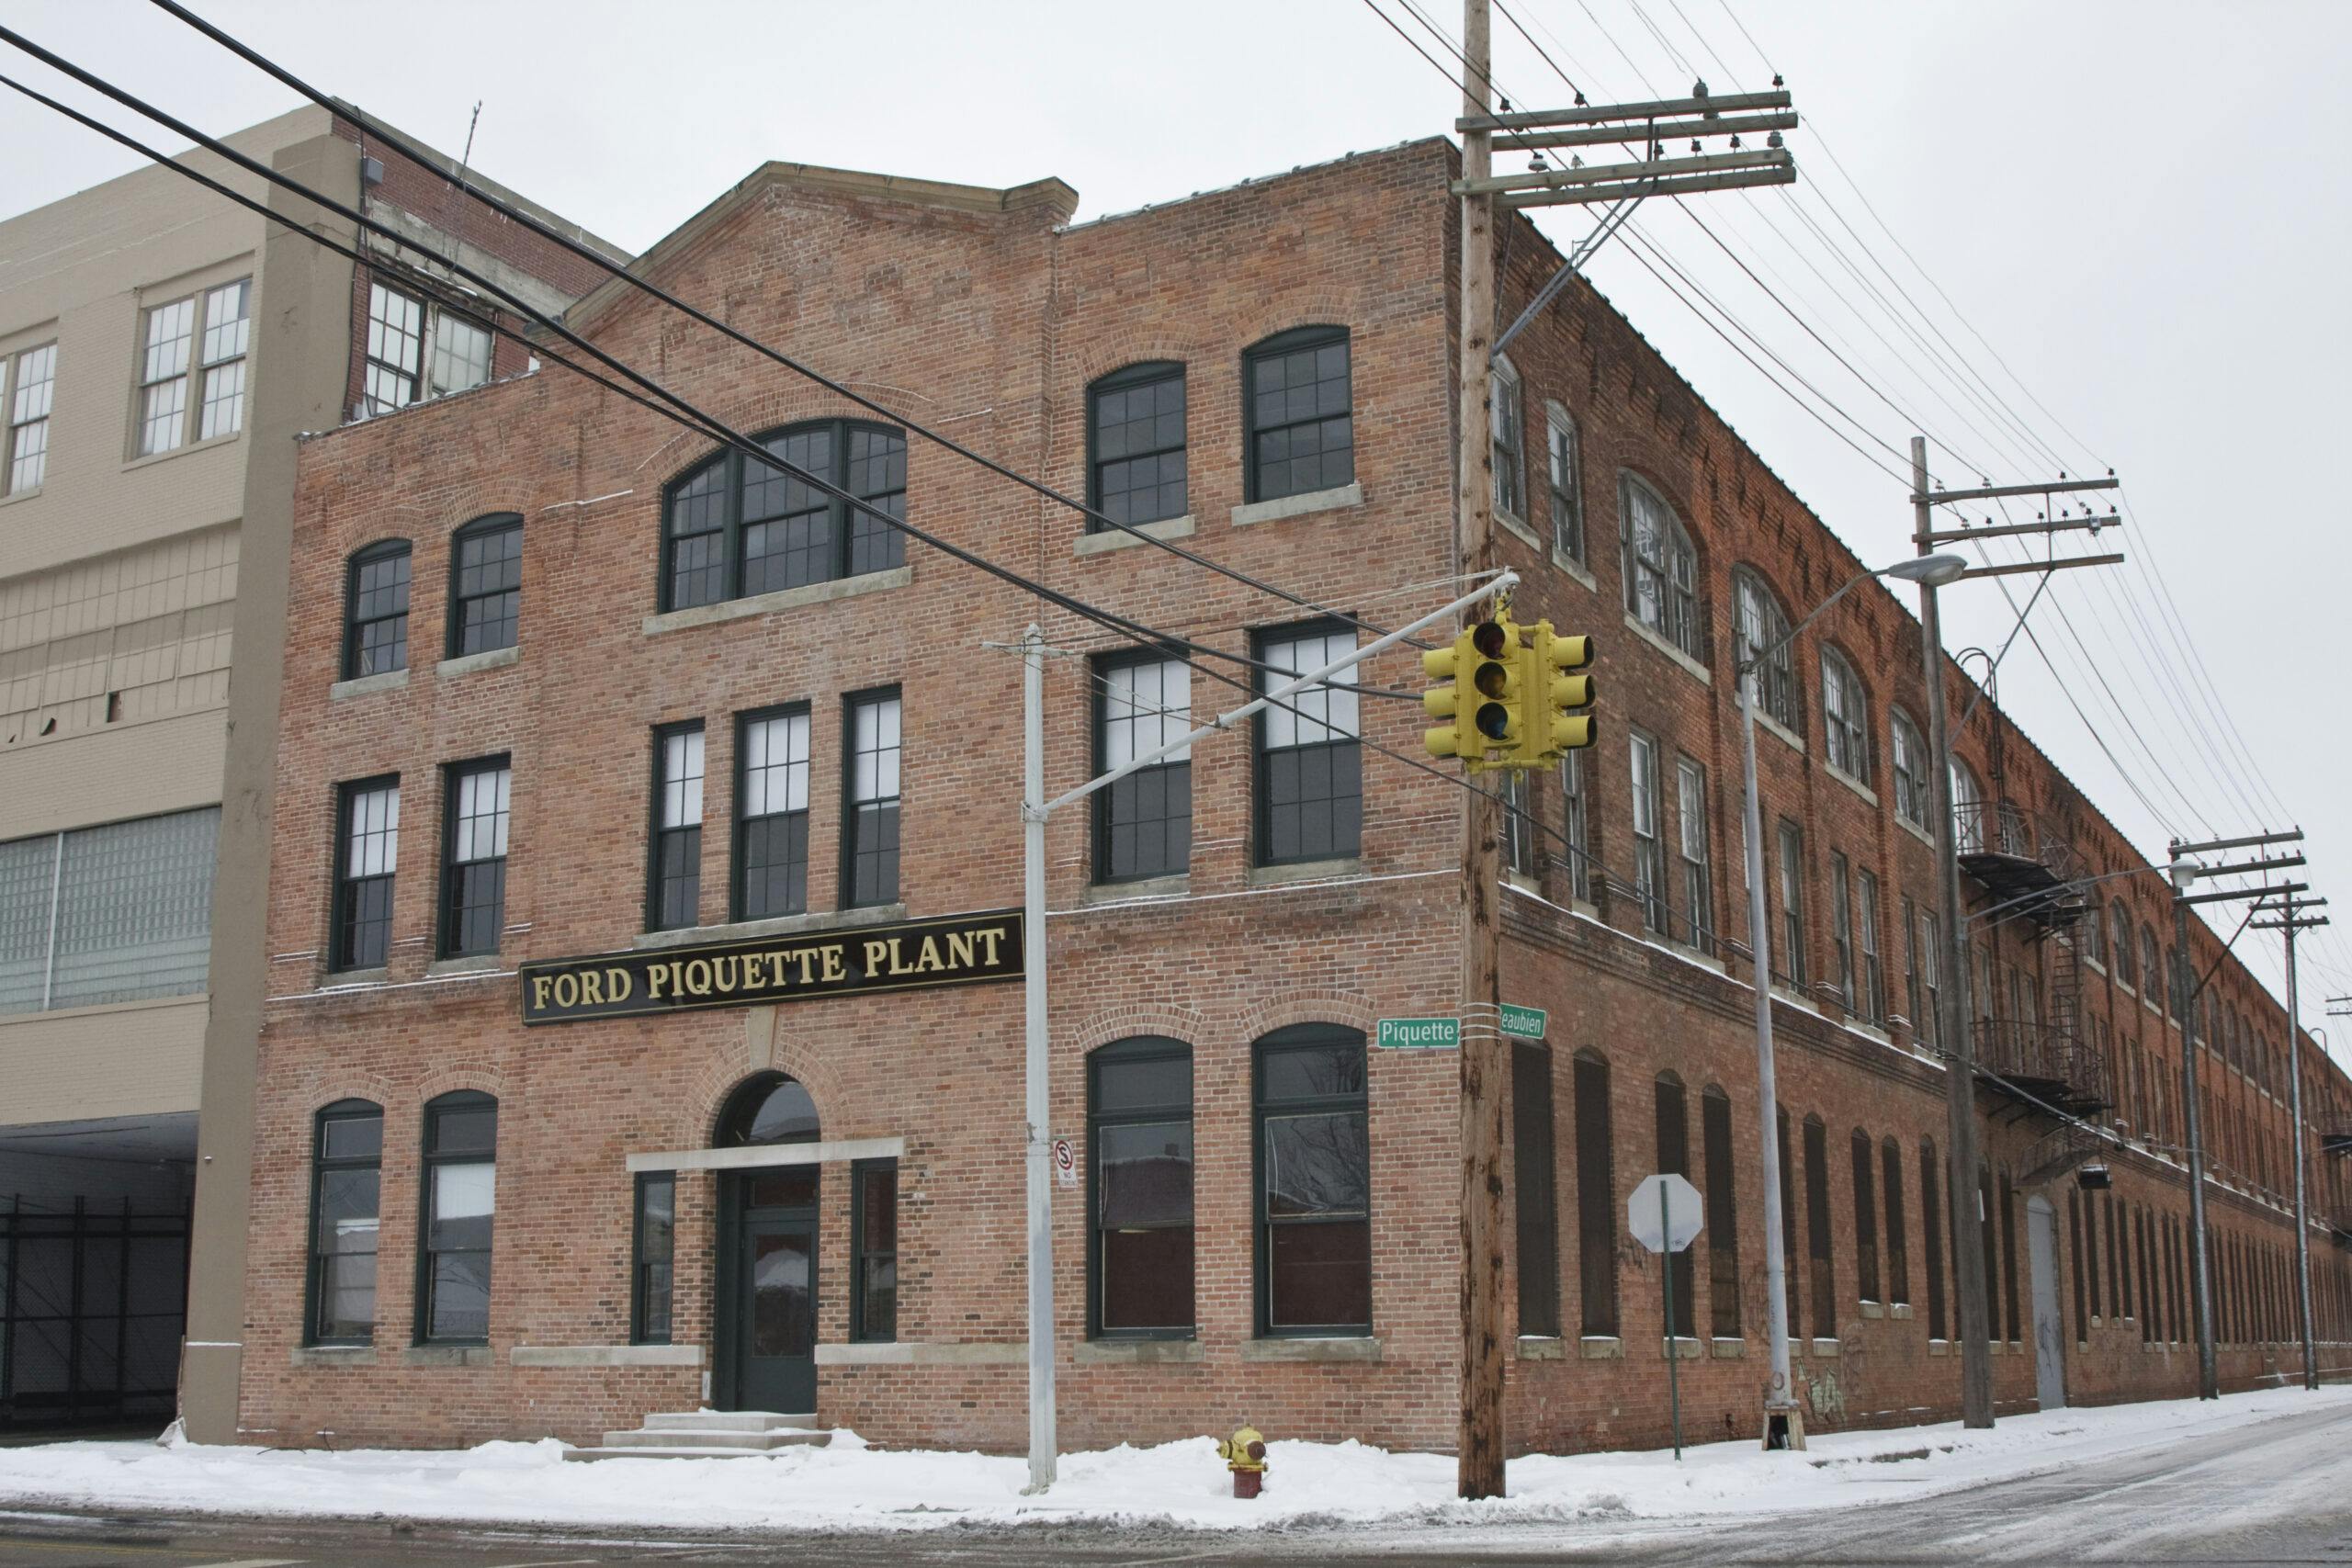 Ford Piquette Plant Detroit Michigan brick building historical exterior